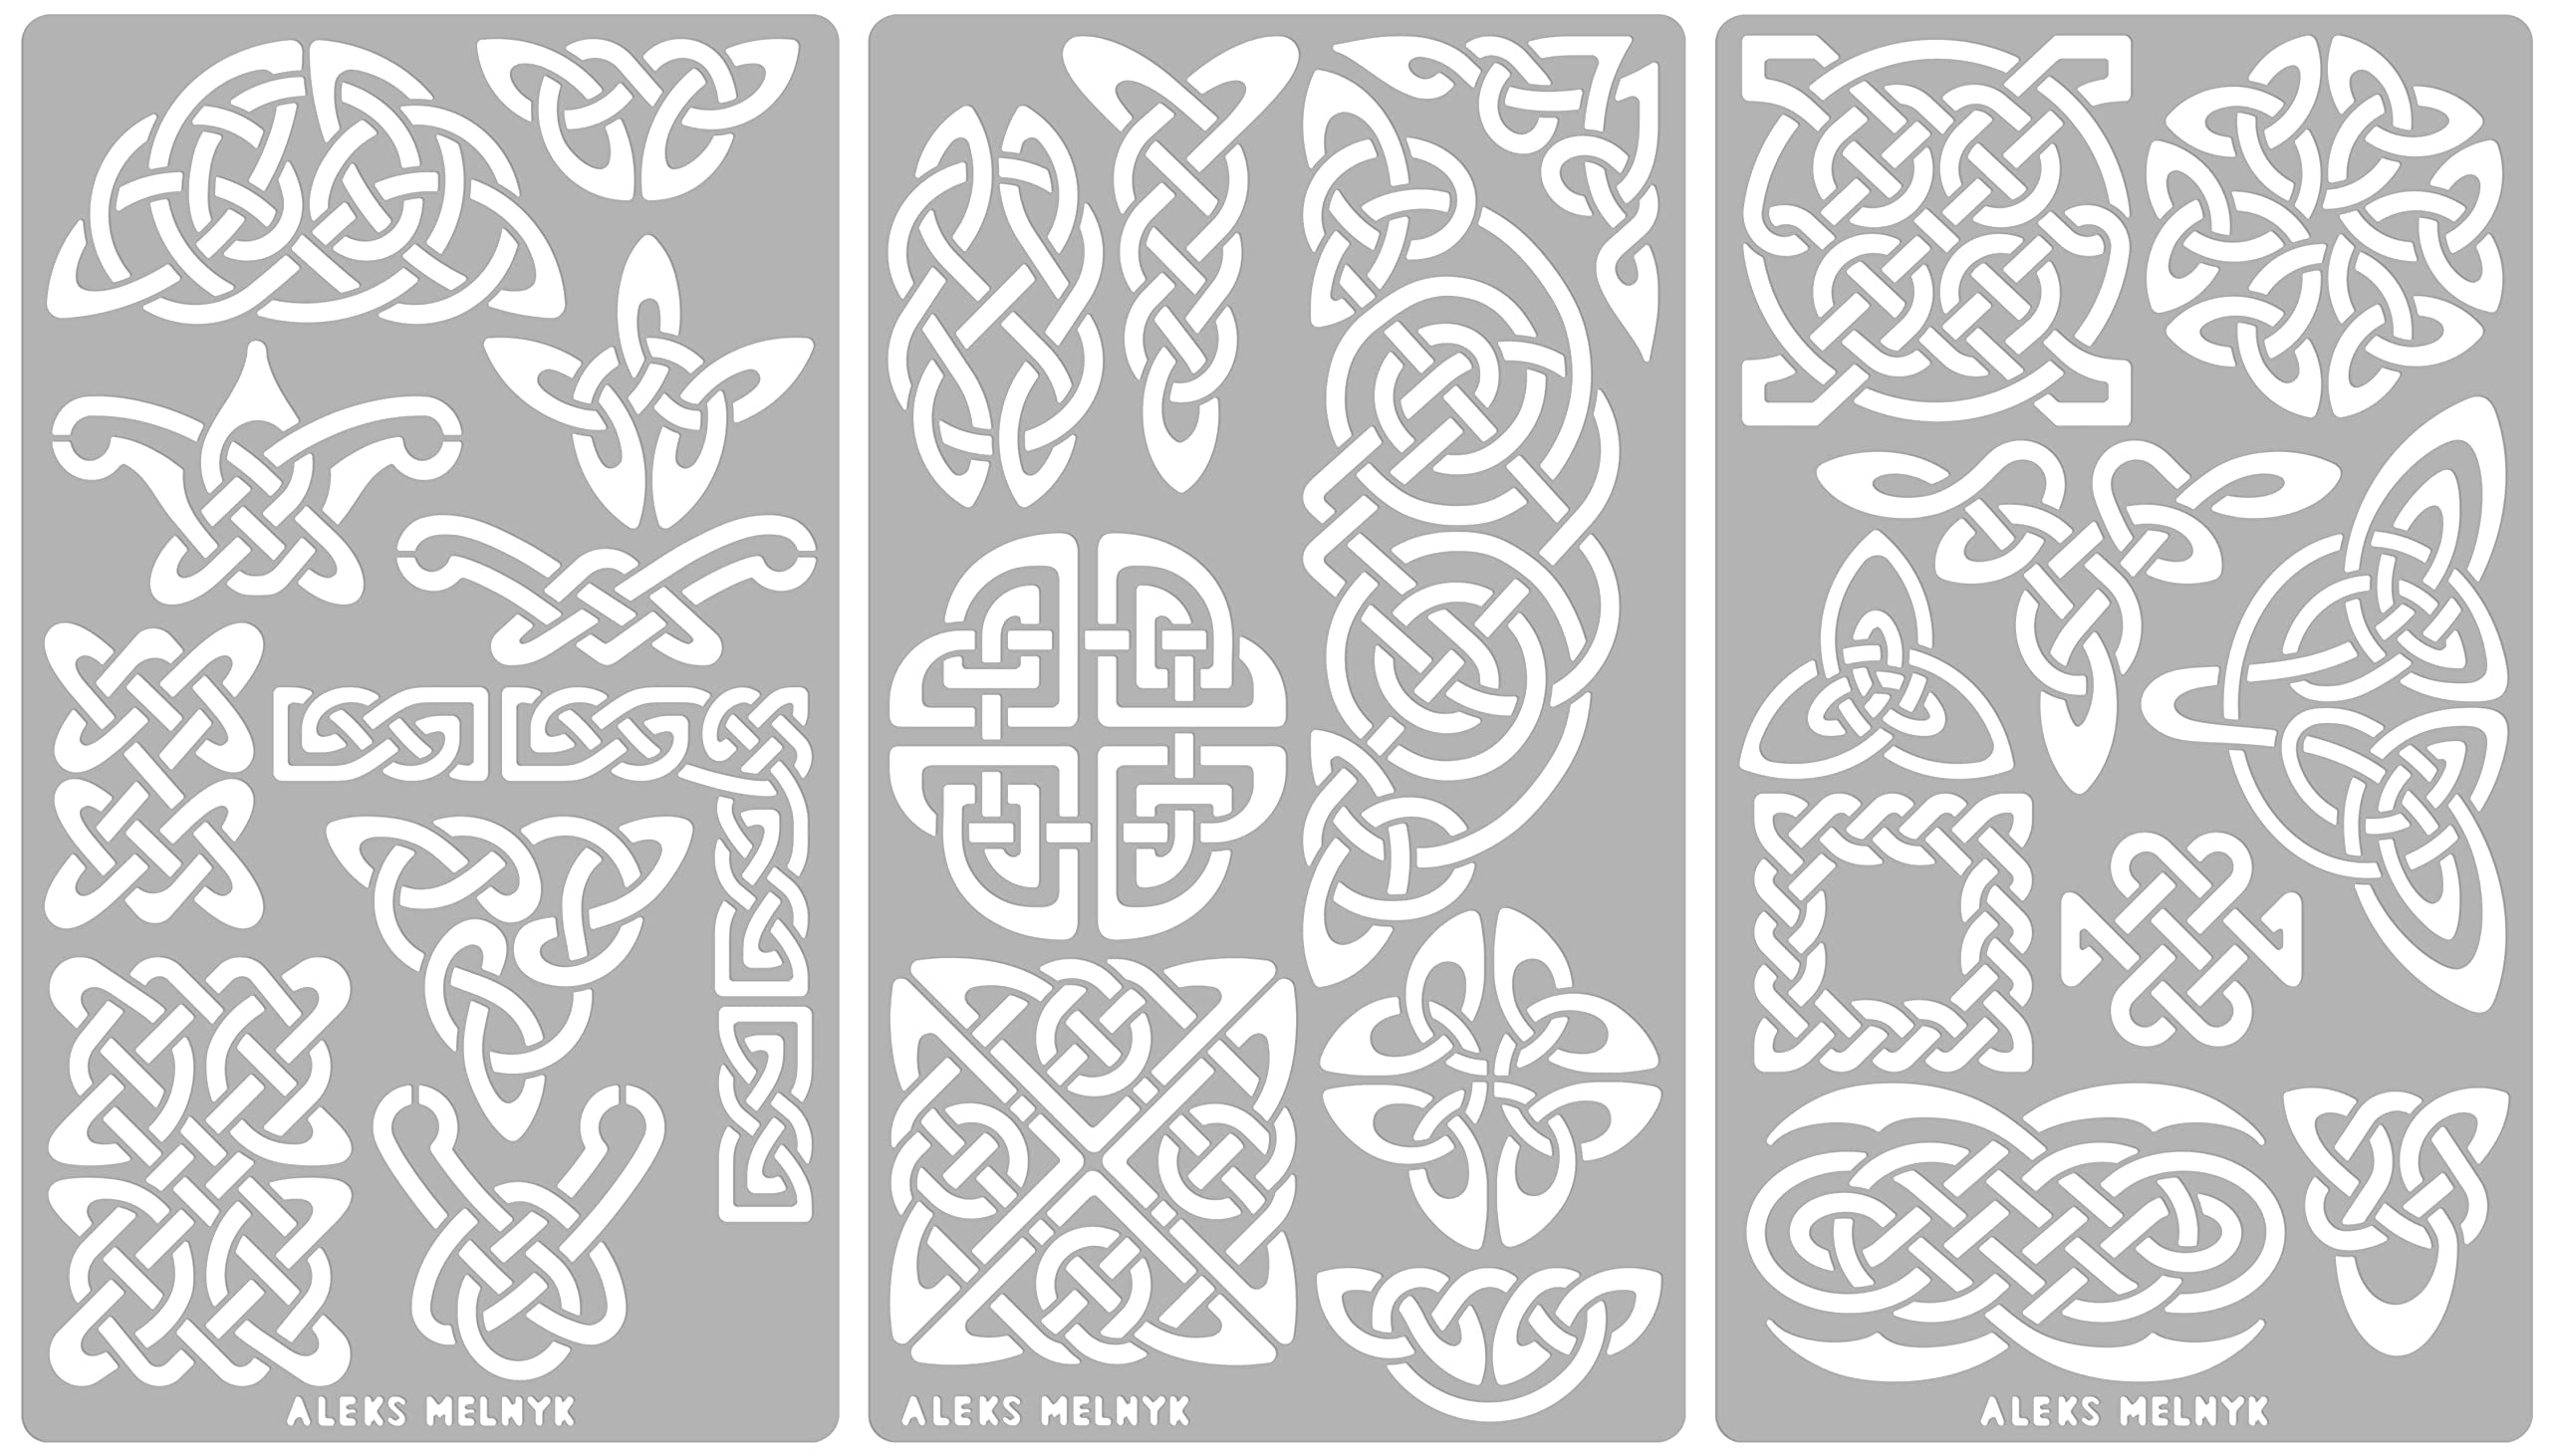 Aleks Melnyk #37 Metal Journal Stencils, Celtic Patterns, Wicca Stencil,  Celtic Knot Stencils, Viking Stencils, Wood Burning Templates, Wood Carving